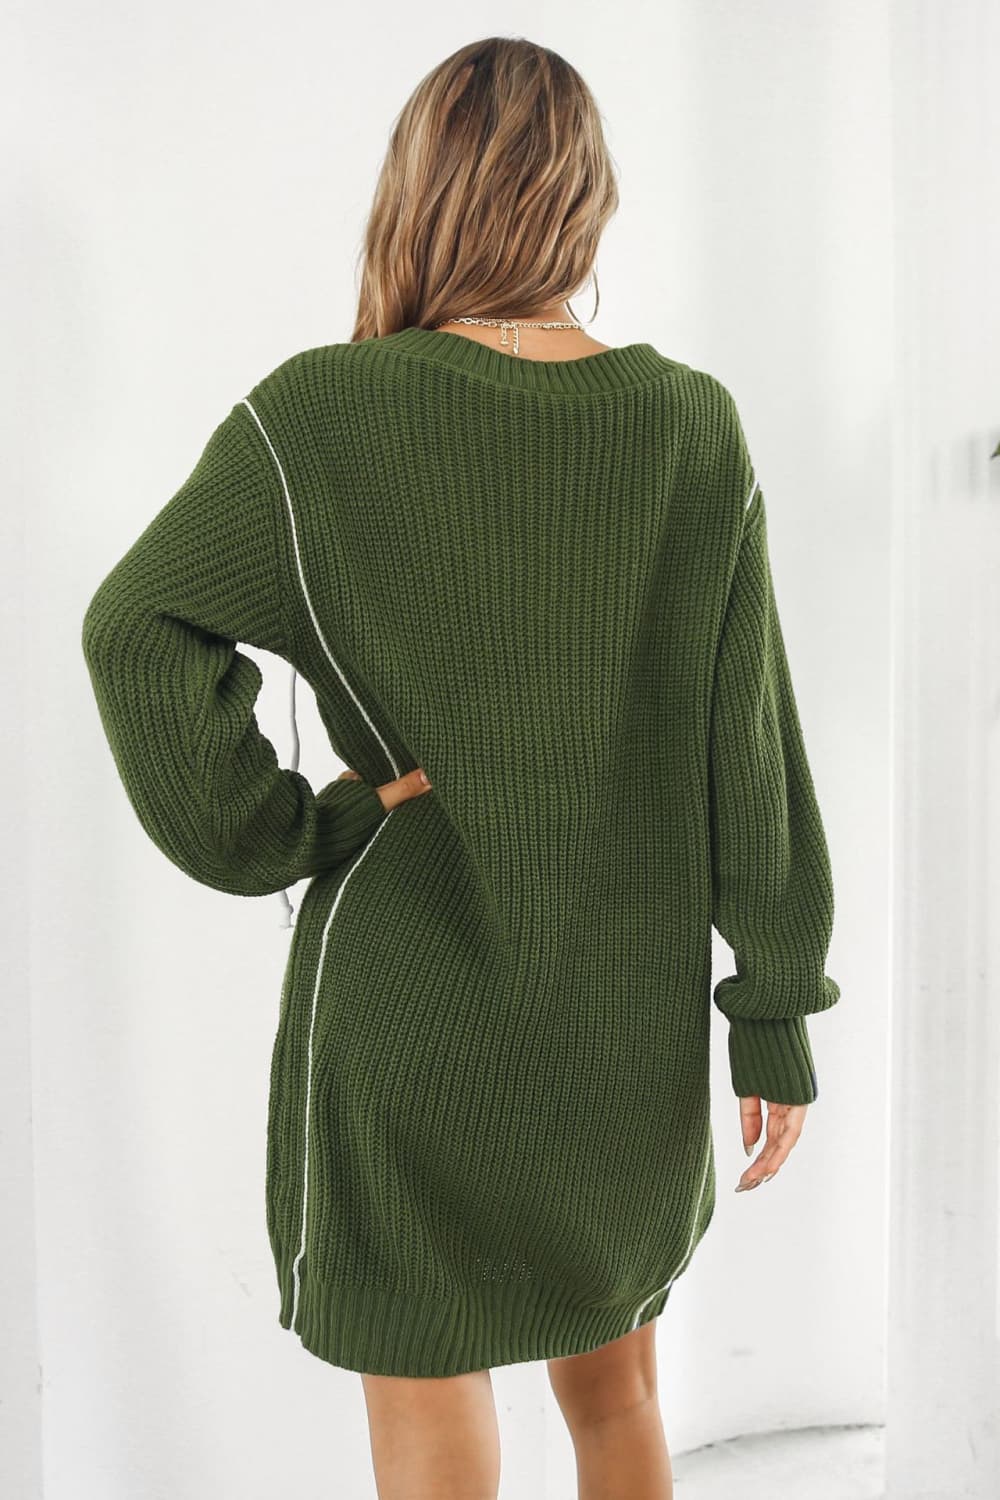 Avery Aria Contrast V-Neck Sweater Dress